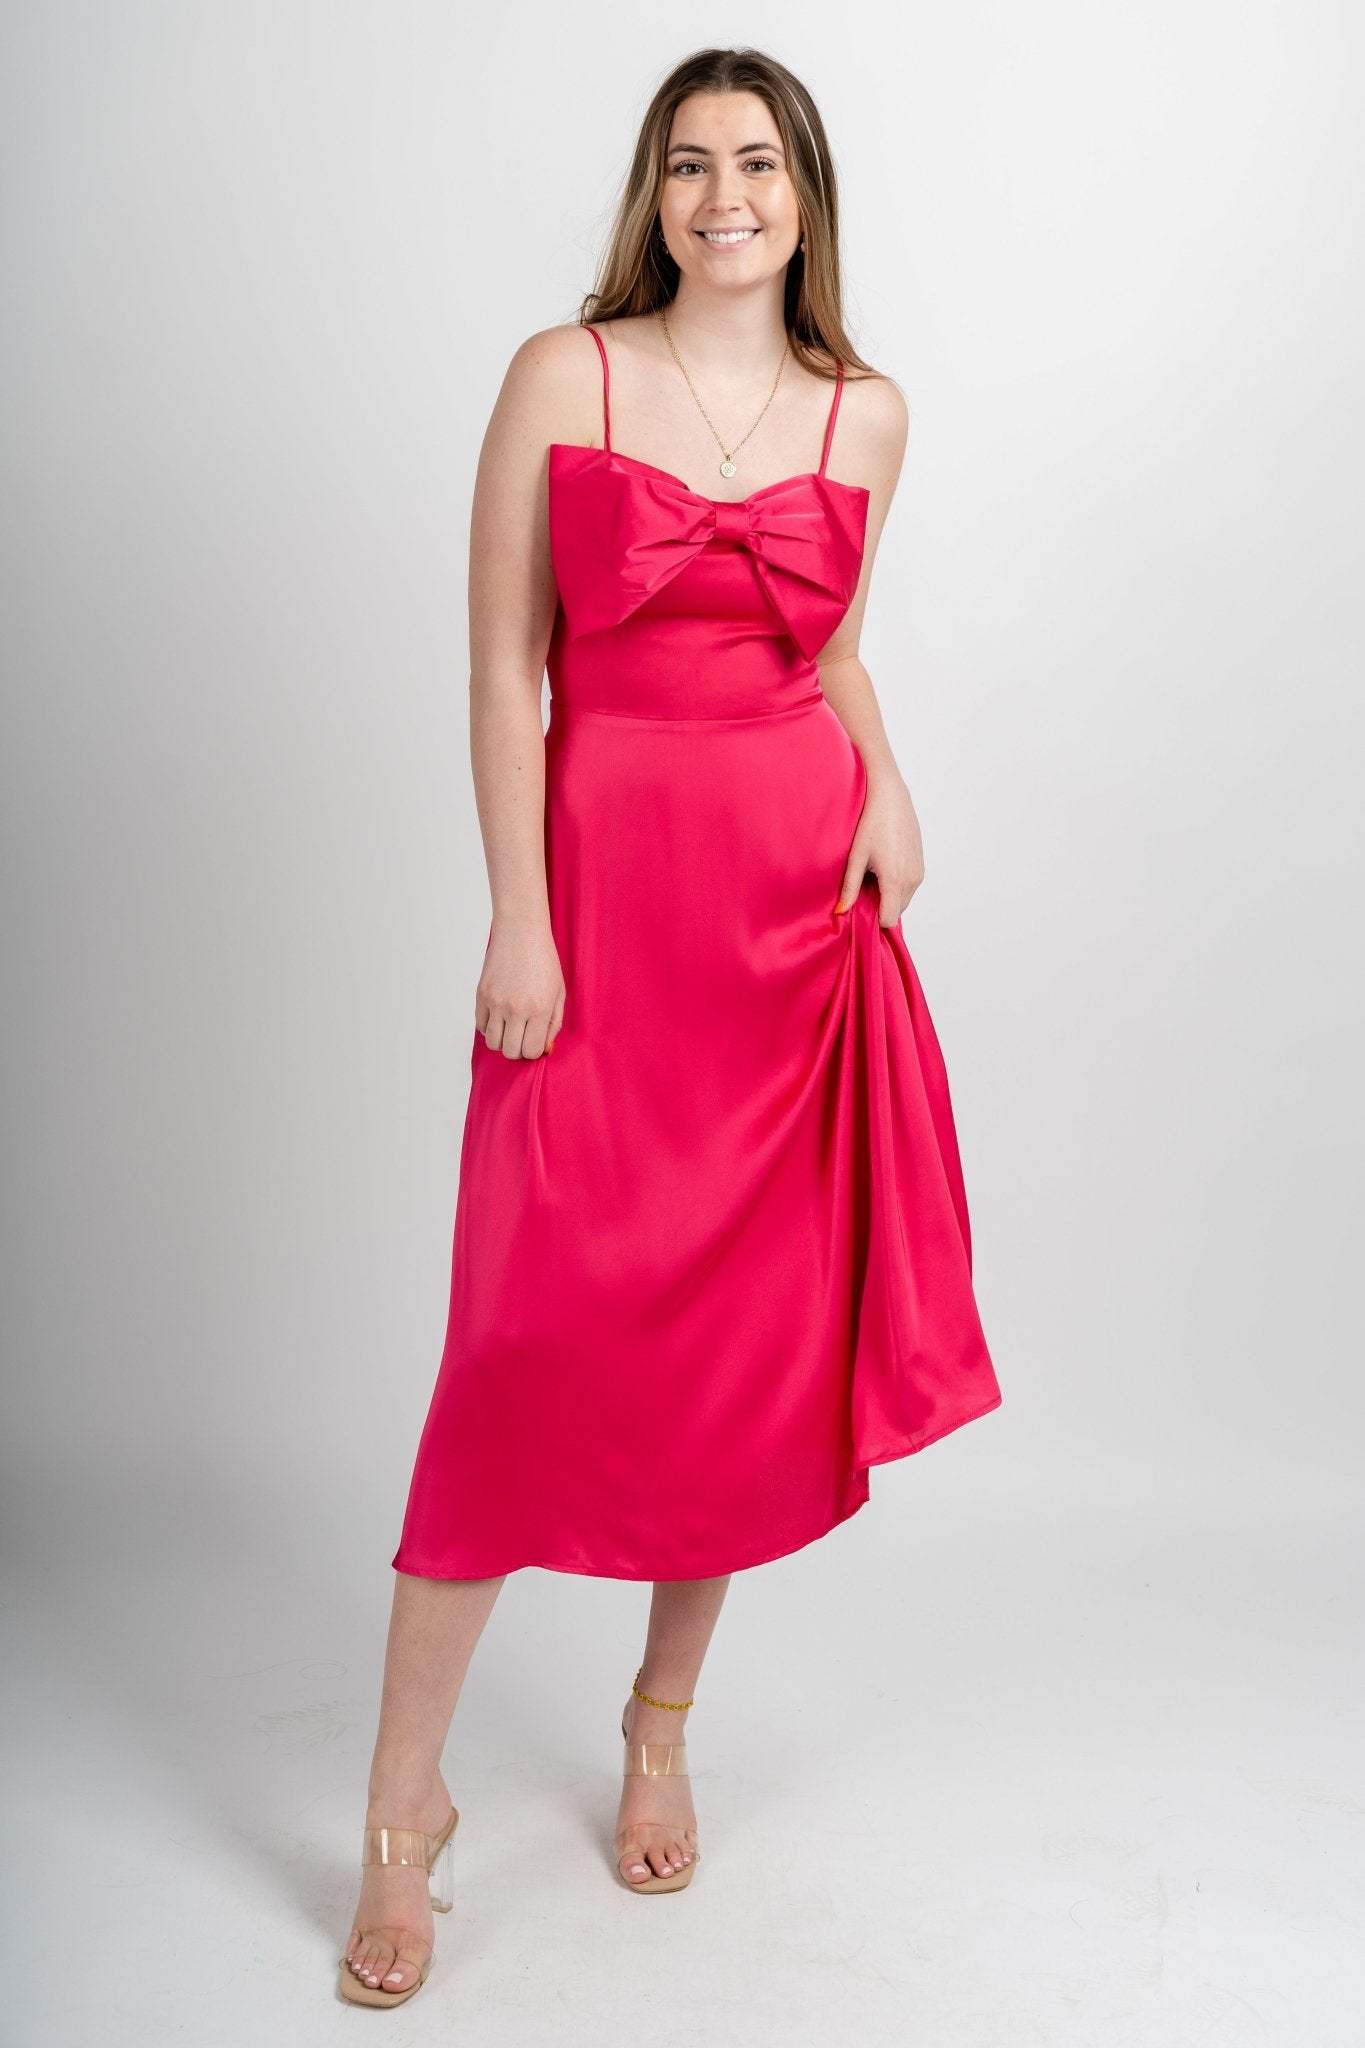 Satin bow detail dress fuchsia - Cute Dresses - Trendy Dresses at Lush Fashion Lounge Boutique in Oklahoma City